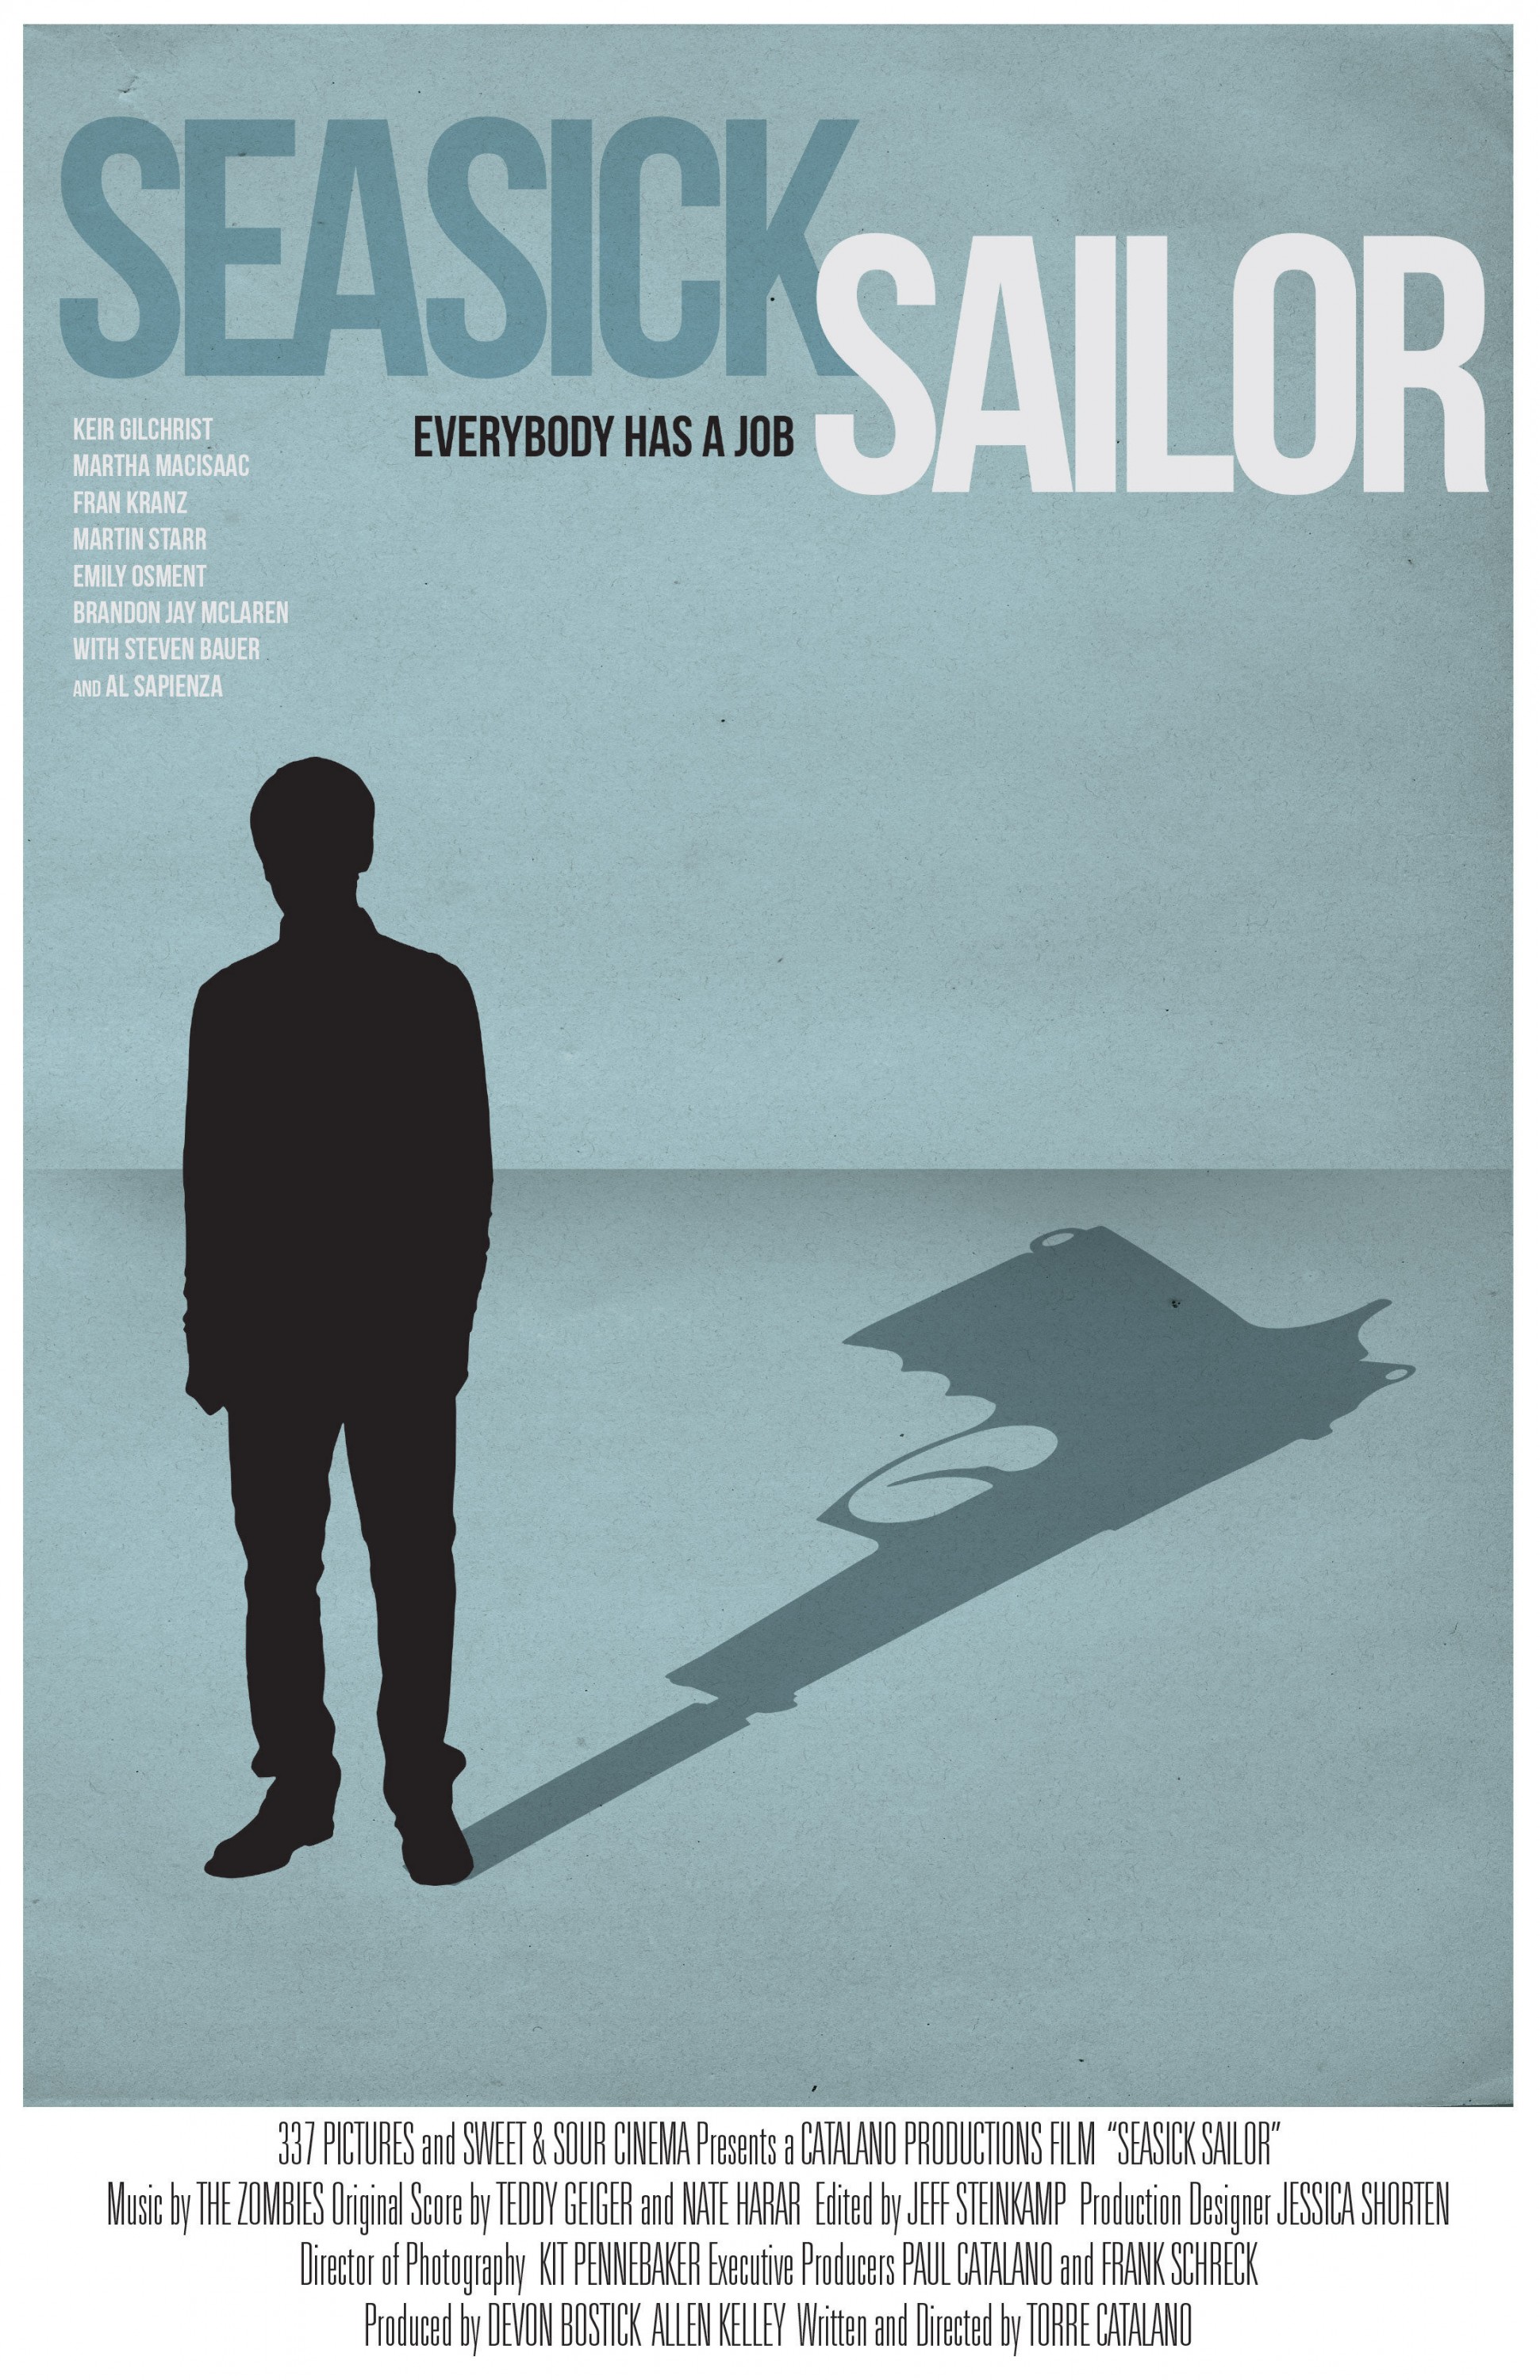 Mega Sized Movie Poster Image for Seasick Sailor